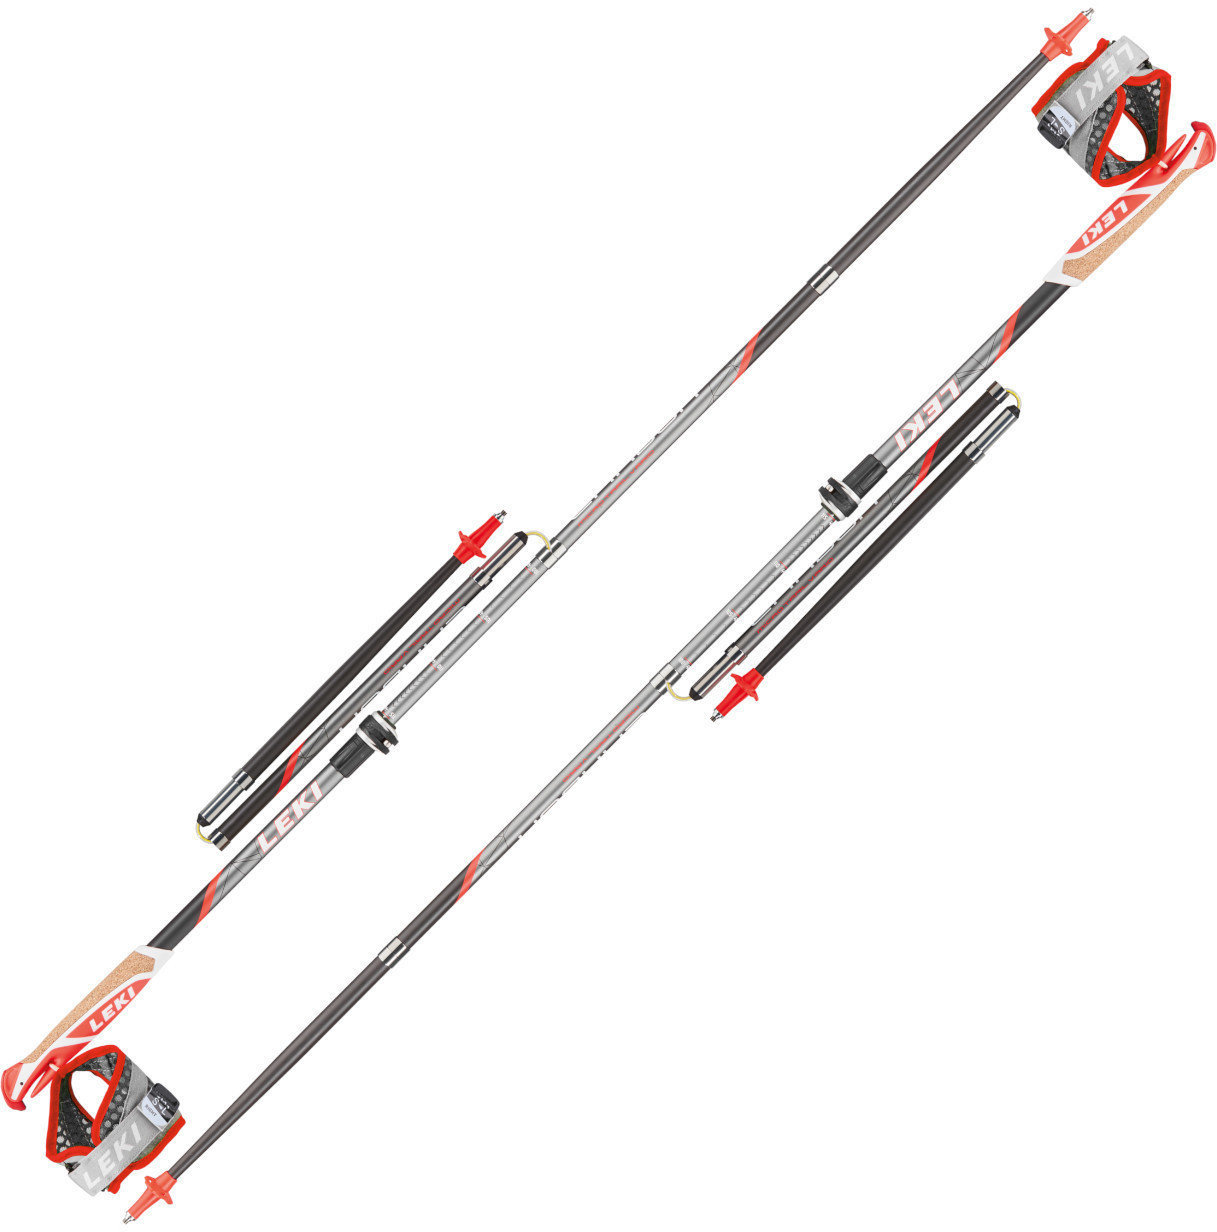 Nordic Walking Poles Leki Micro Trail Vario Light Anthracite/Black/Neon Red/White 100 - 120 cm